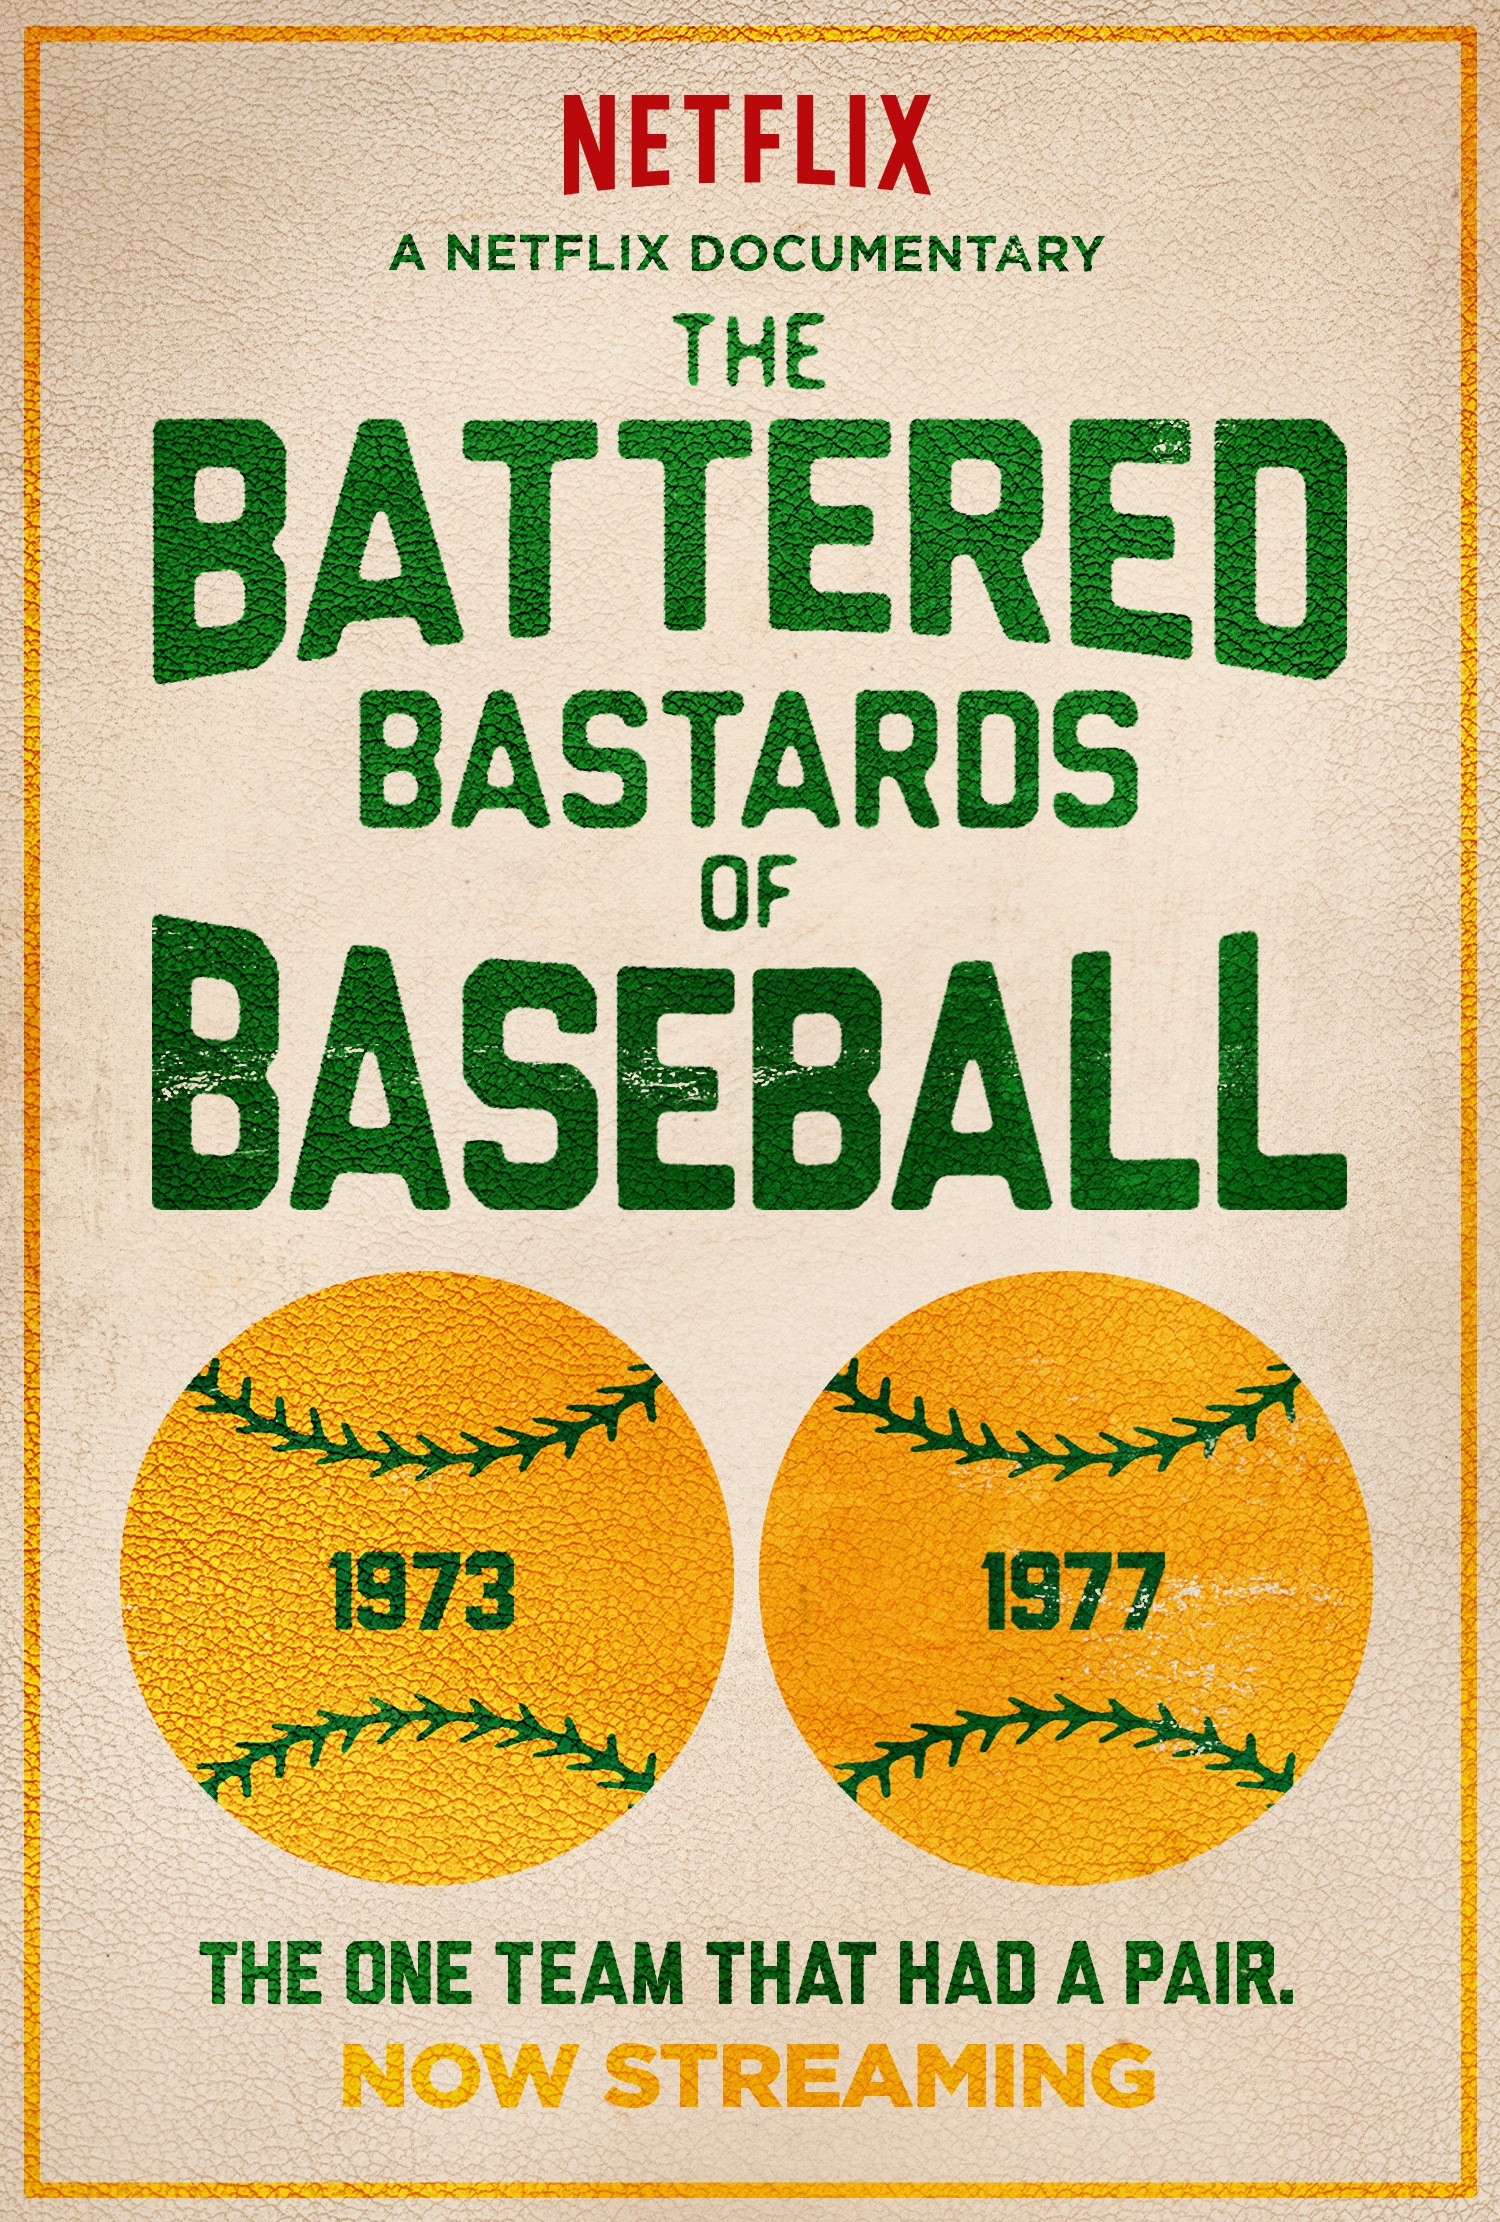 Mega Sized TV Poster Image for The Battered Bastards of Baseball (#2 of 2)